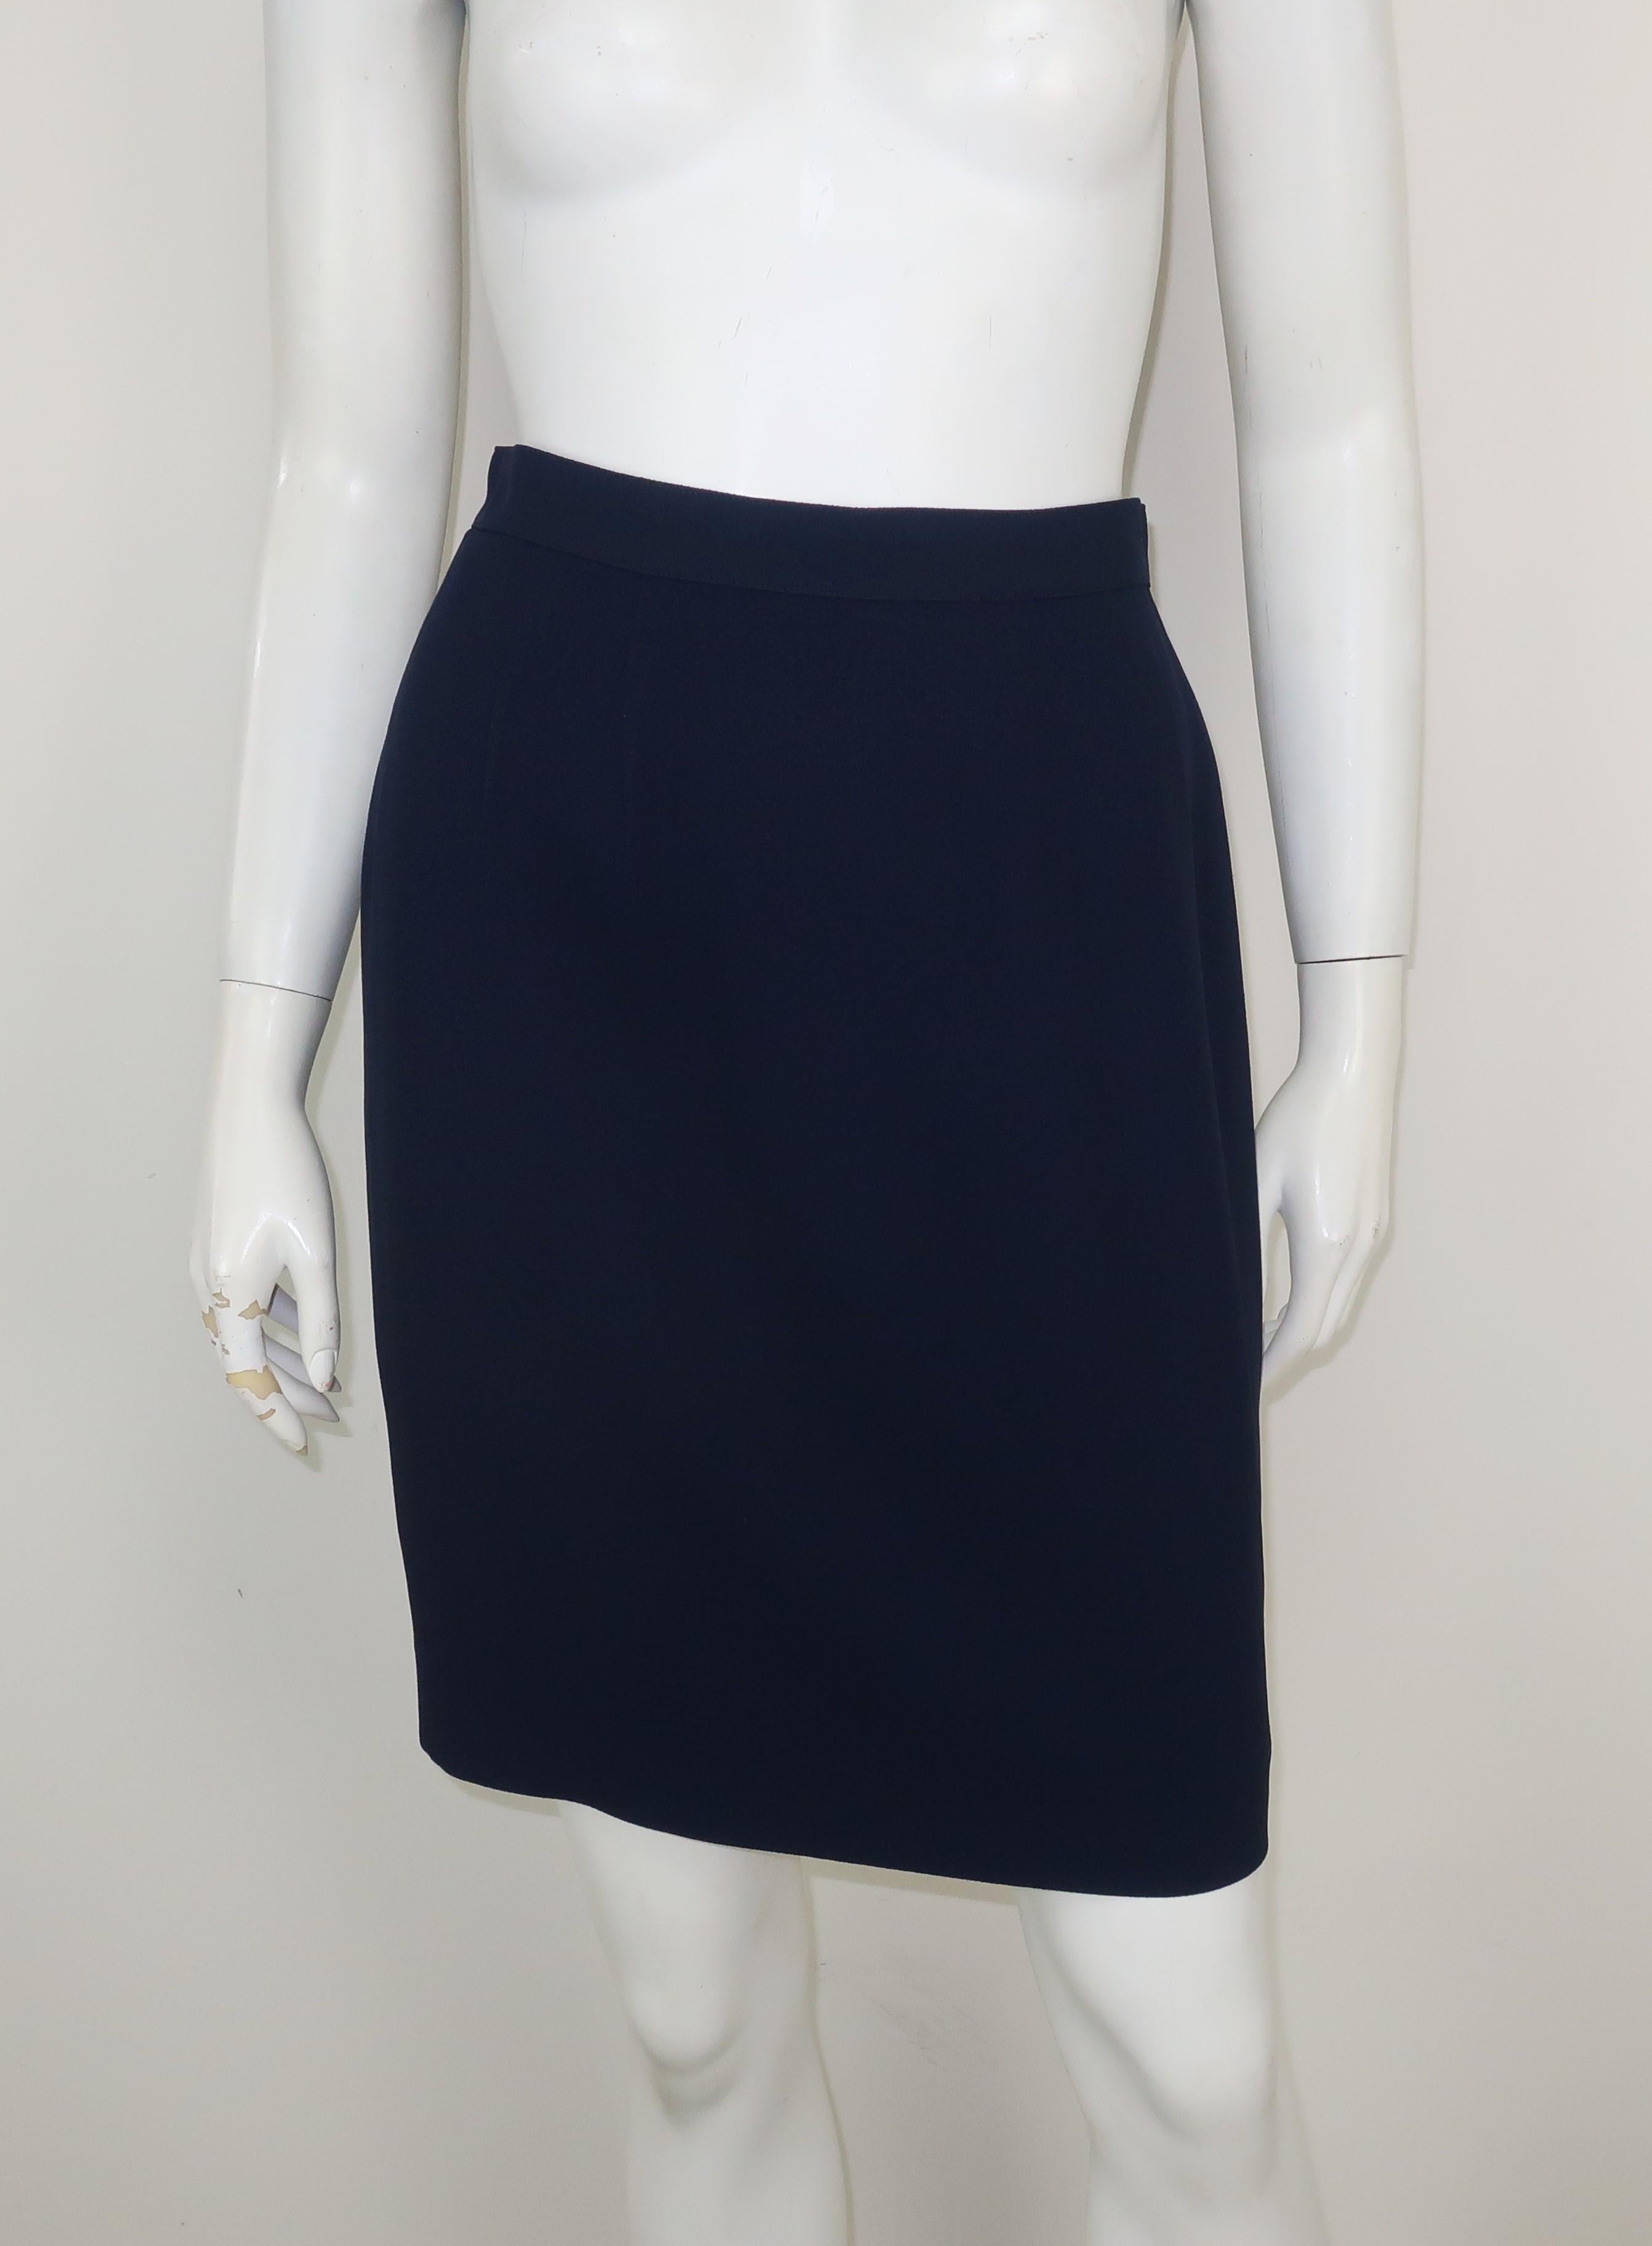 Karl Lagerfeld Navy Blue Peplum Skirt Suit C.1990 5